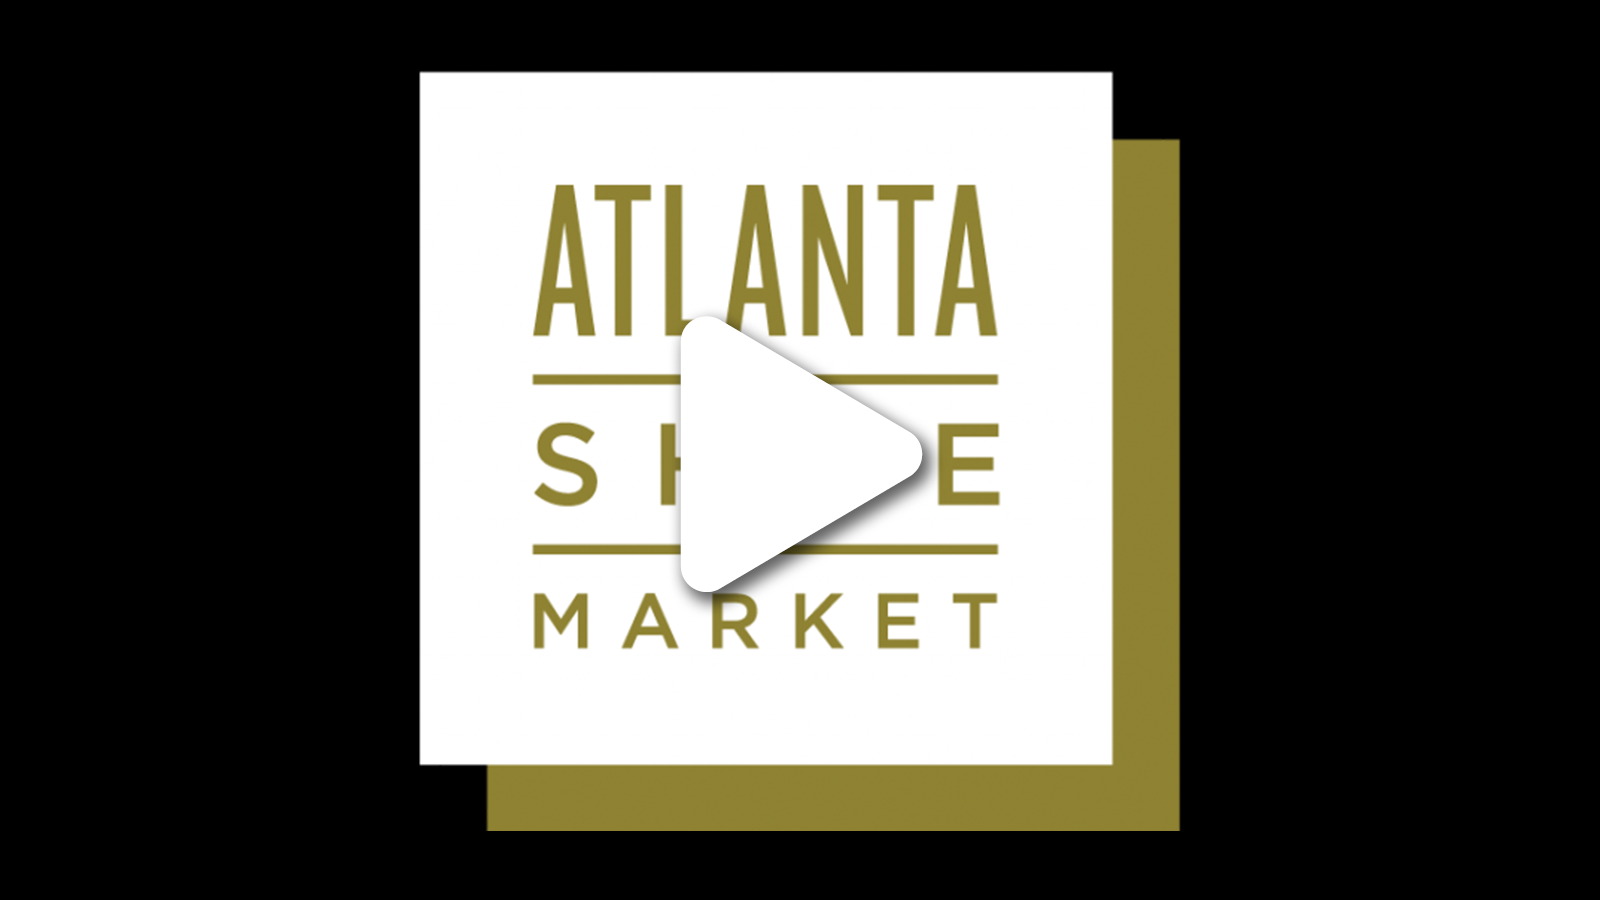 The Atlanta Shoe Market - Footwear Plus Magazine